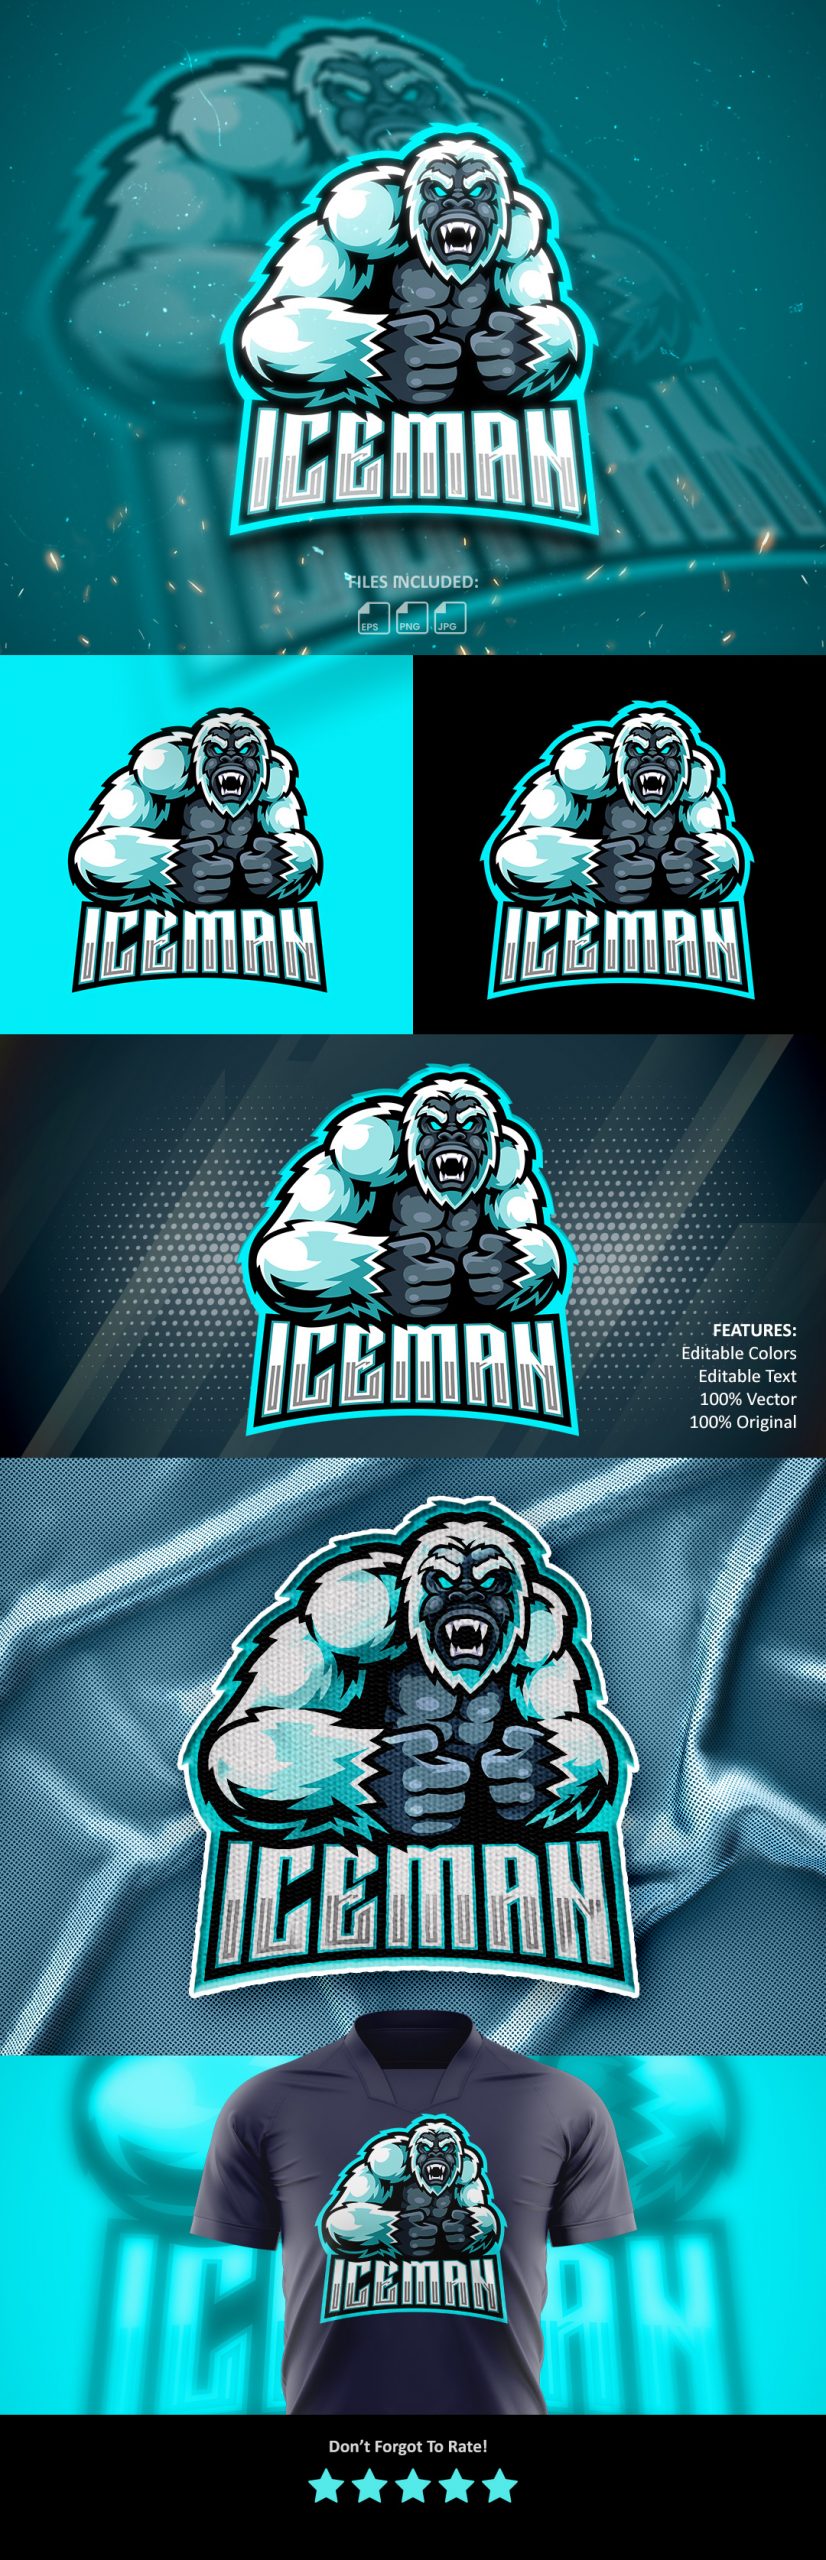 Free-Download-Iceman-Mascot-Logo